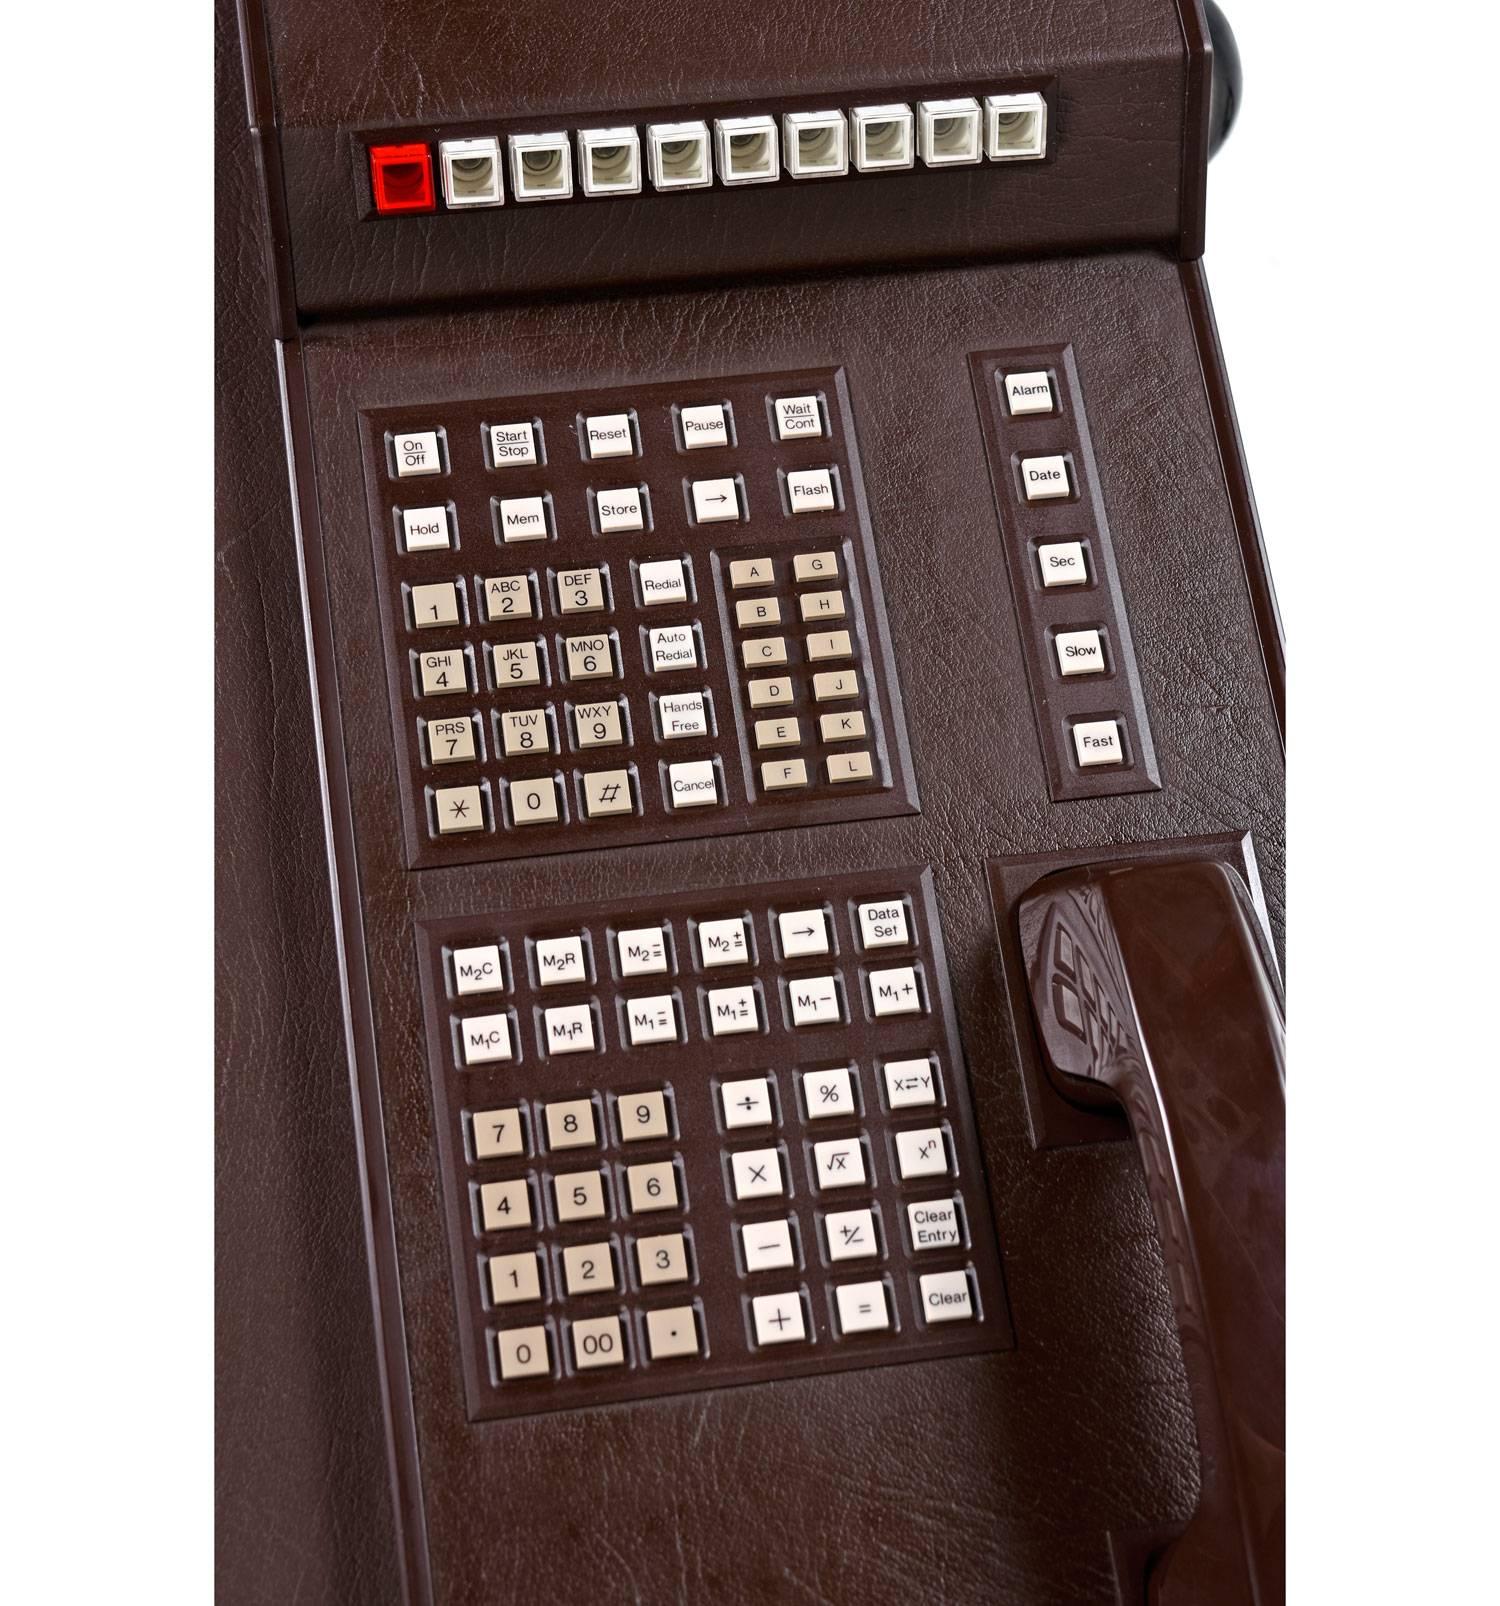 NOS Bynamics Leather Desk Director Phone System Six Hundred, 1985 1